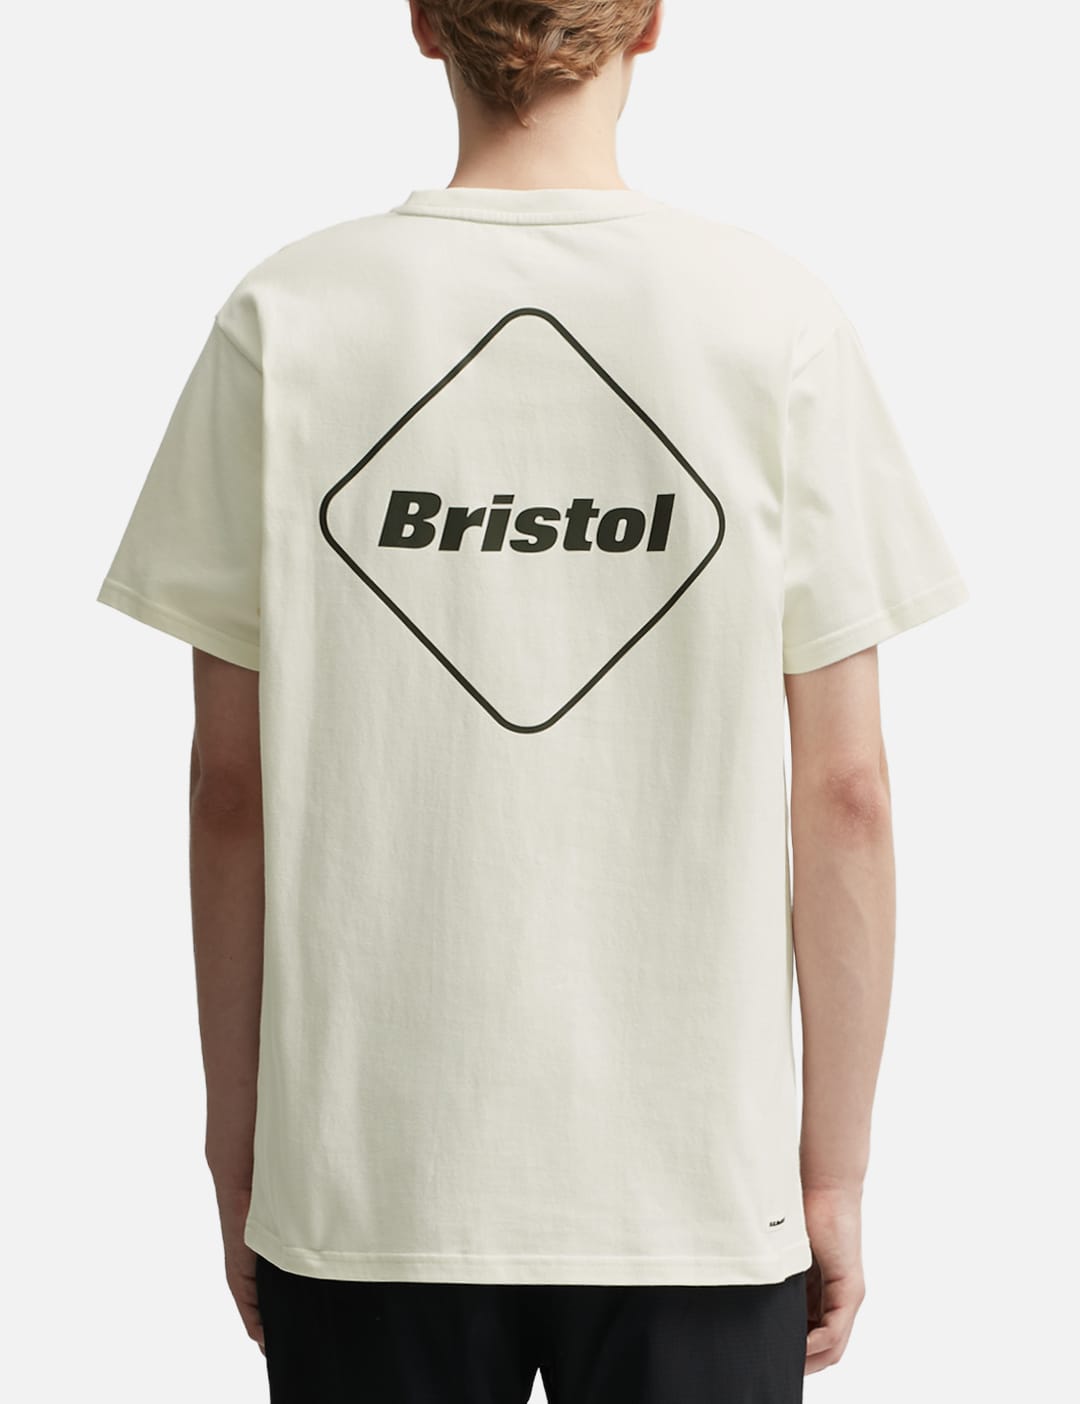 F.C. Real Bristol - Emblem T-shirt | HBX - Globally Curated 